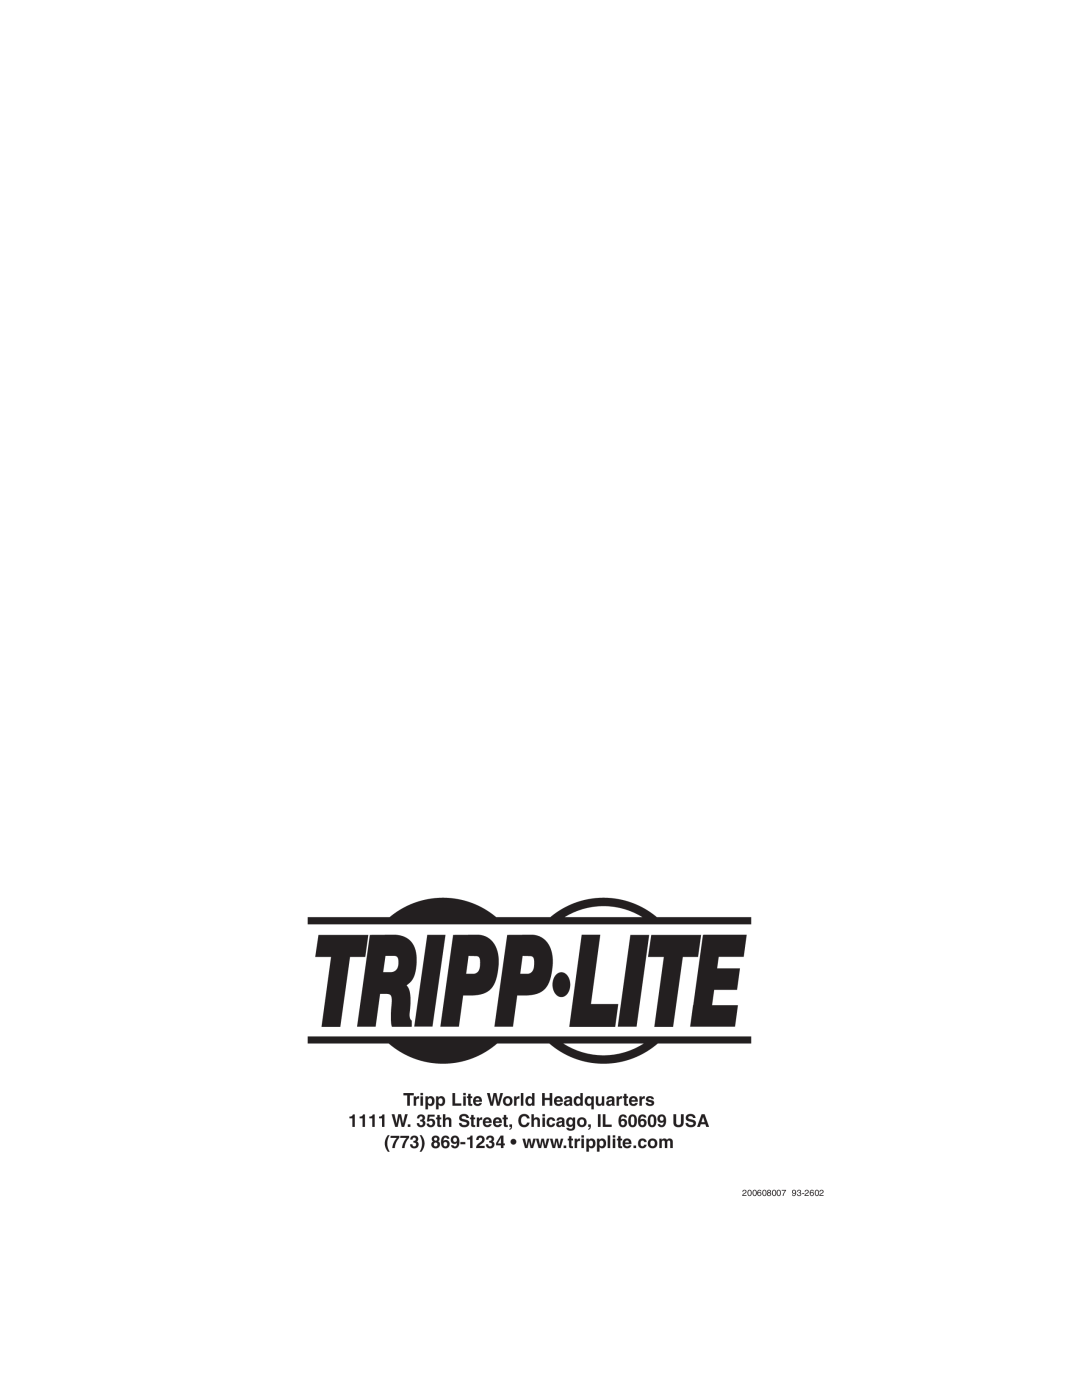 Tripp Lite B034-102-R owner manual Tripp Lite World Headquarters, 1111 W. 35th Street, Chicago, IL 60609 USA, 200608007 